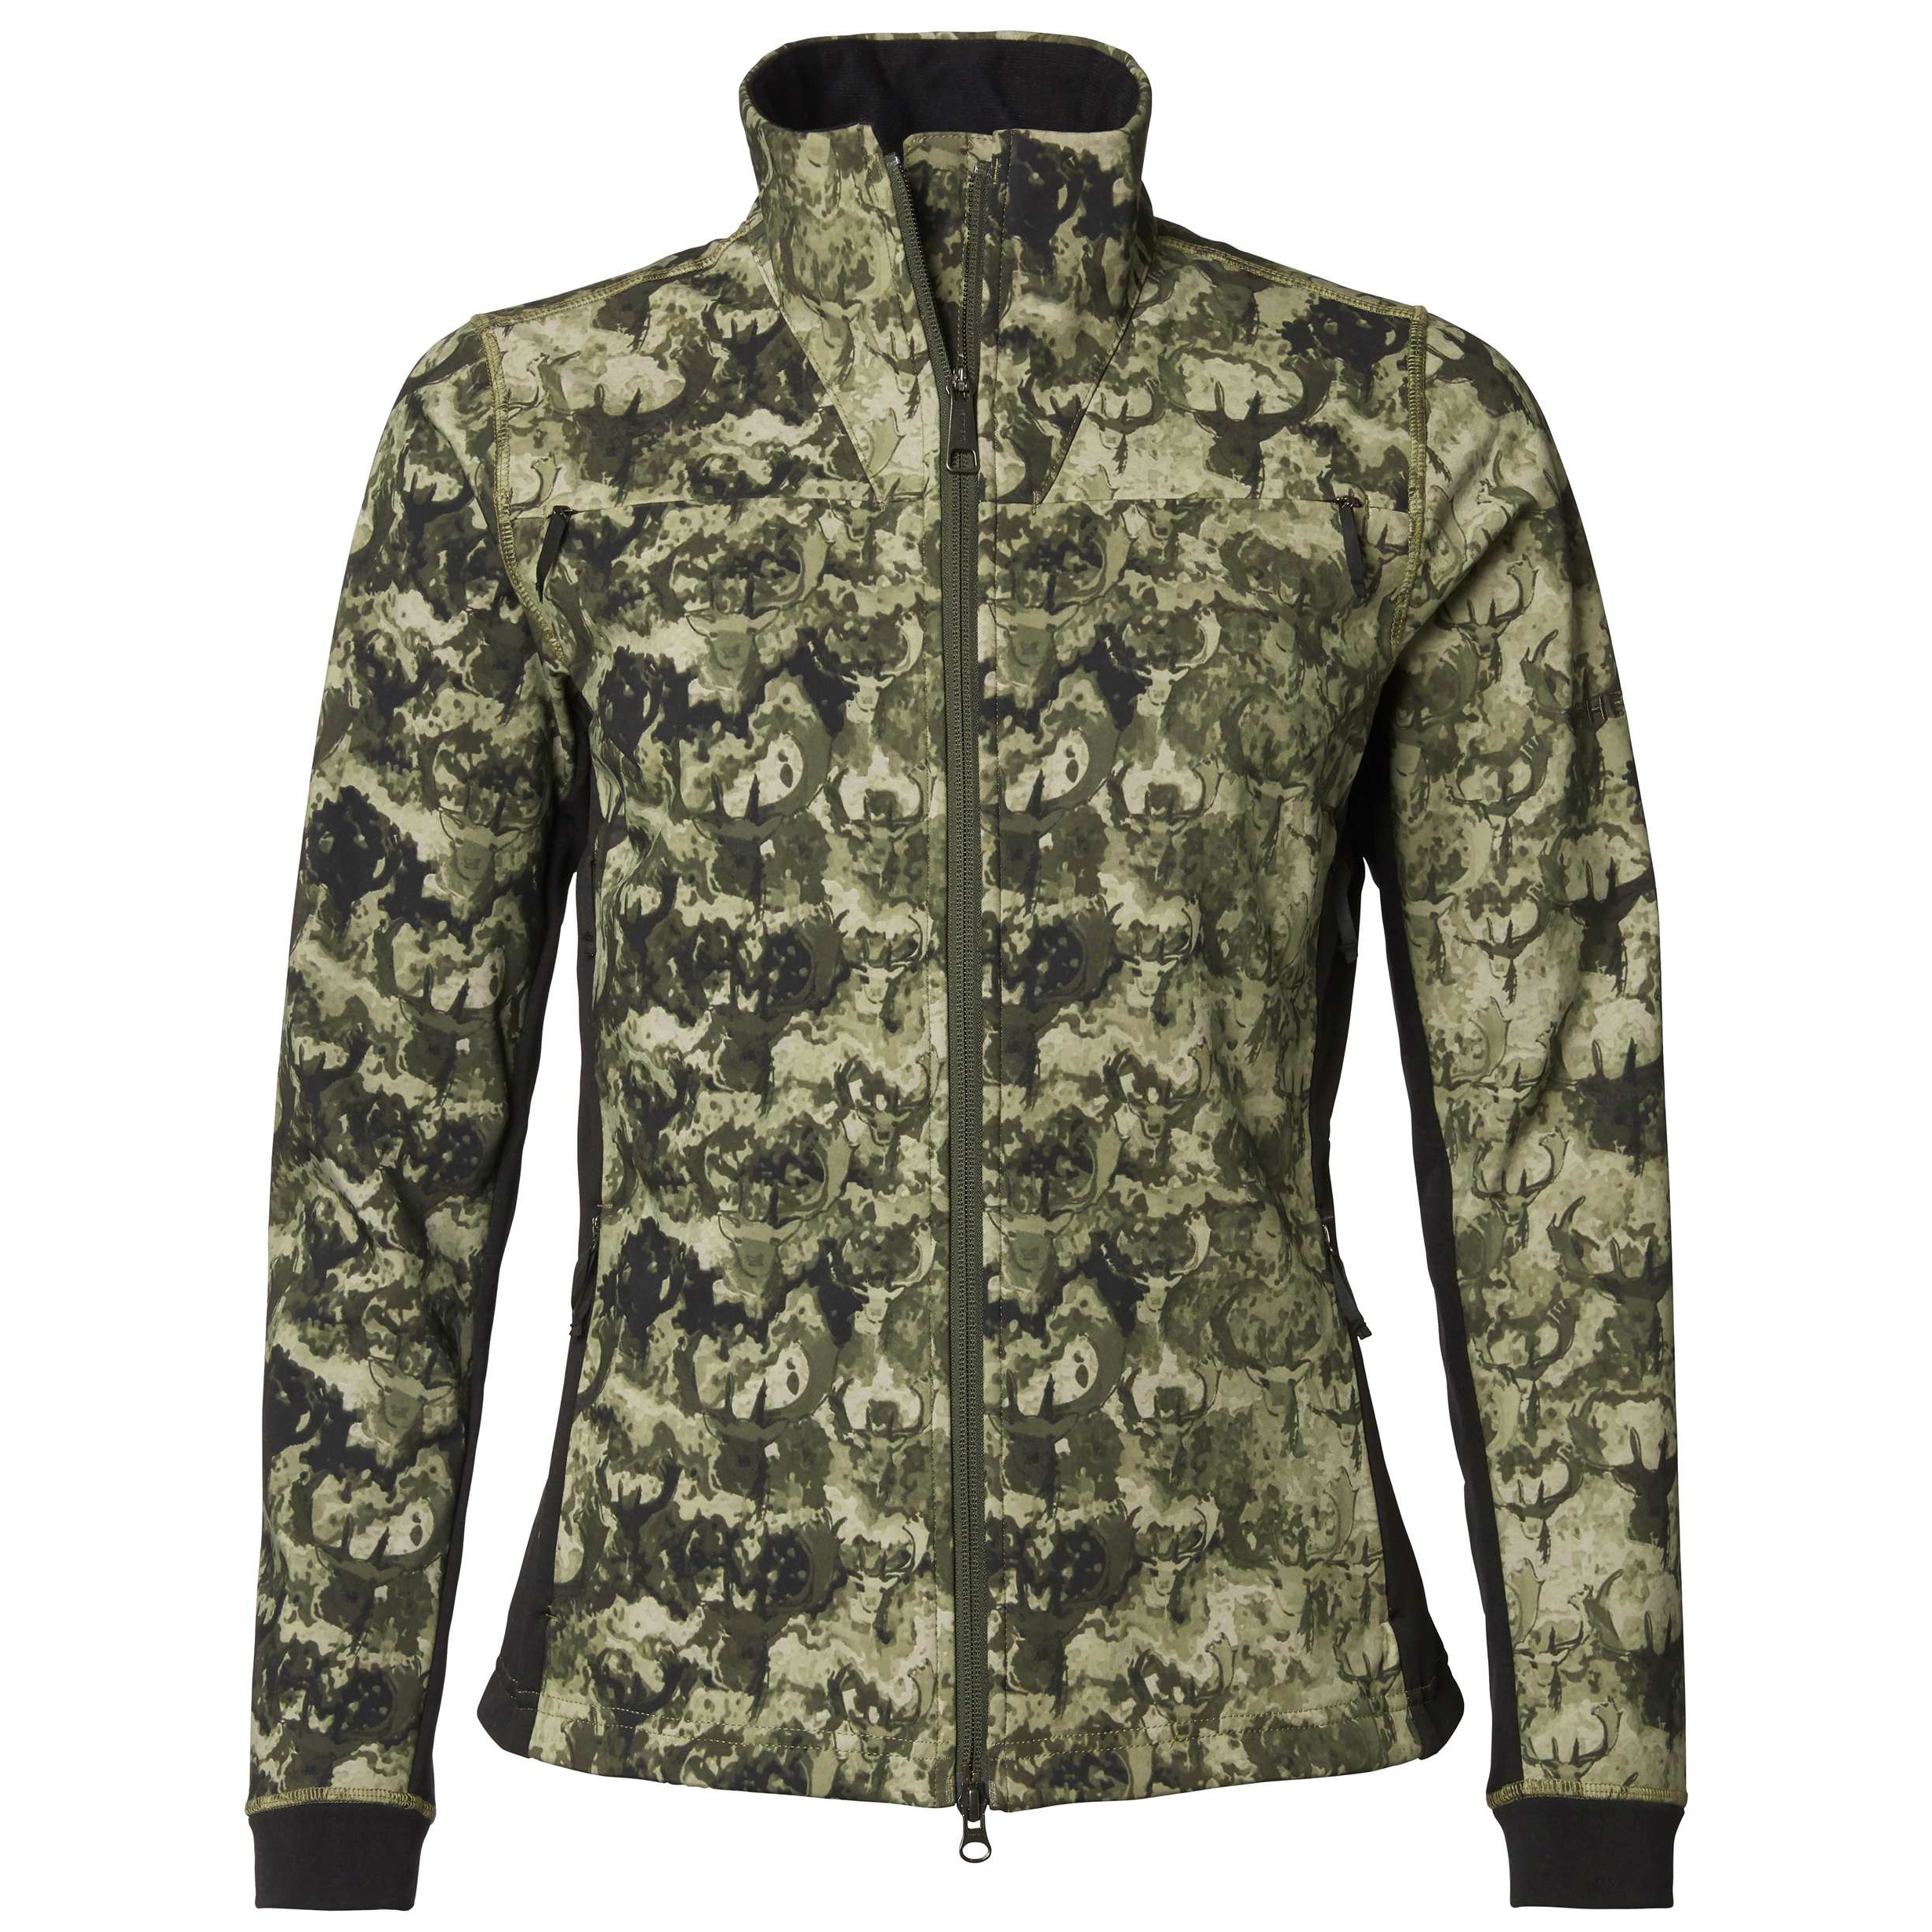 Windproof fleece jackets for men & women - Jackets in windproof fleece -  Chevalier